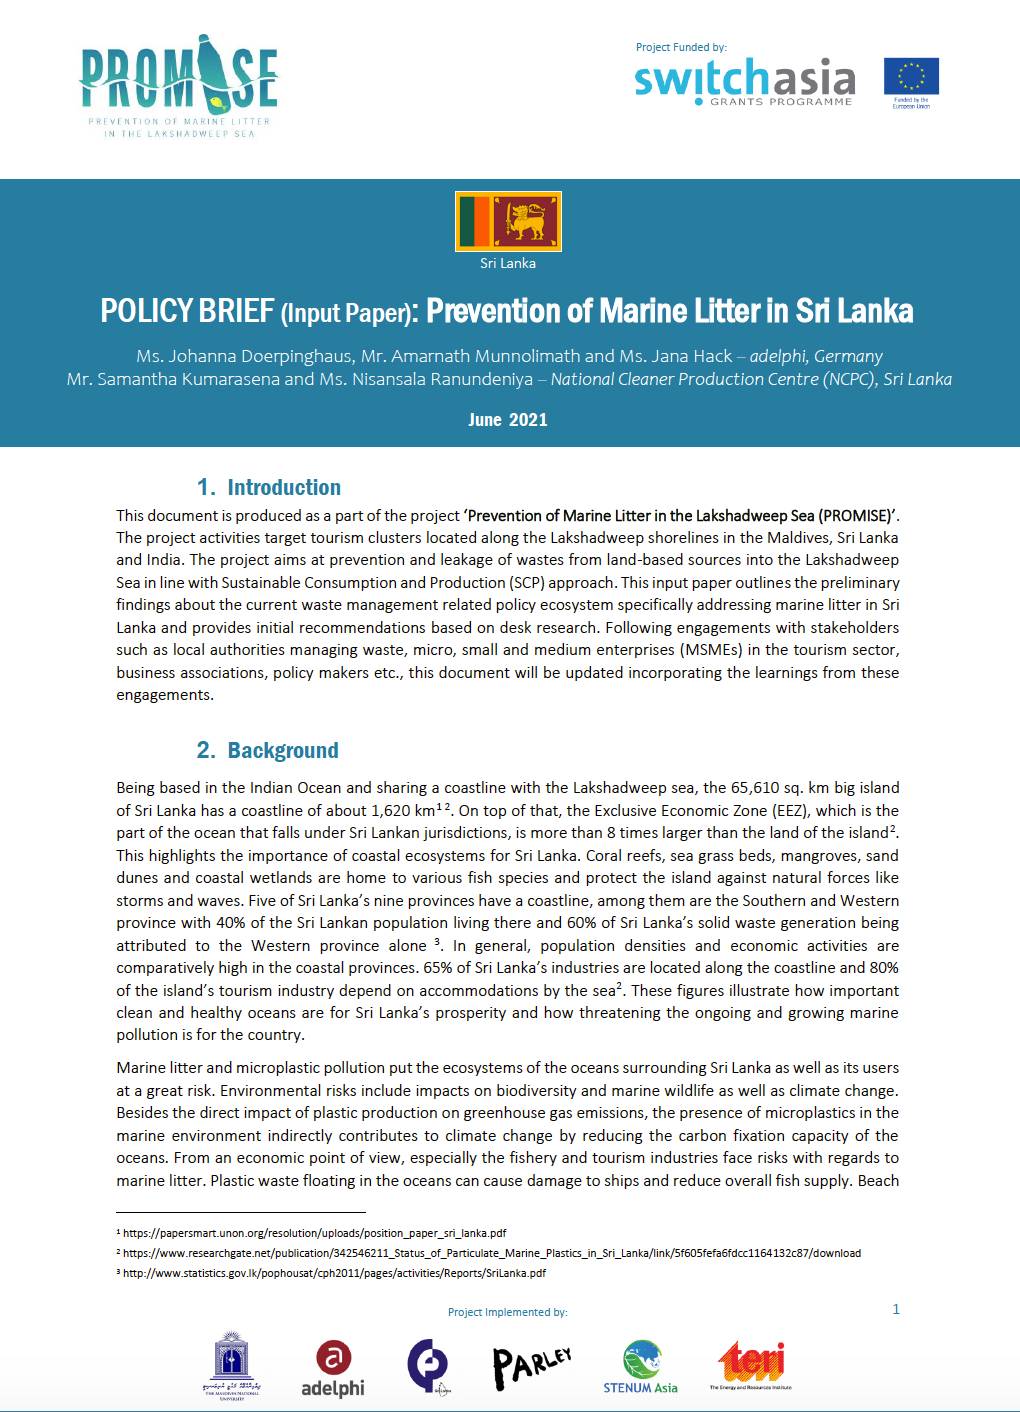 POLICY BRIEF: Prevention of Marine Litter in Sri Lanka